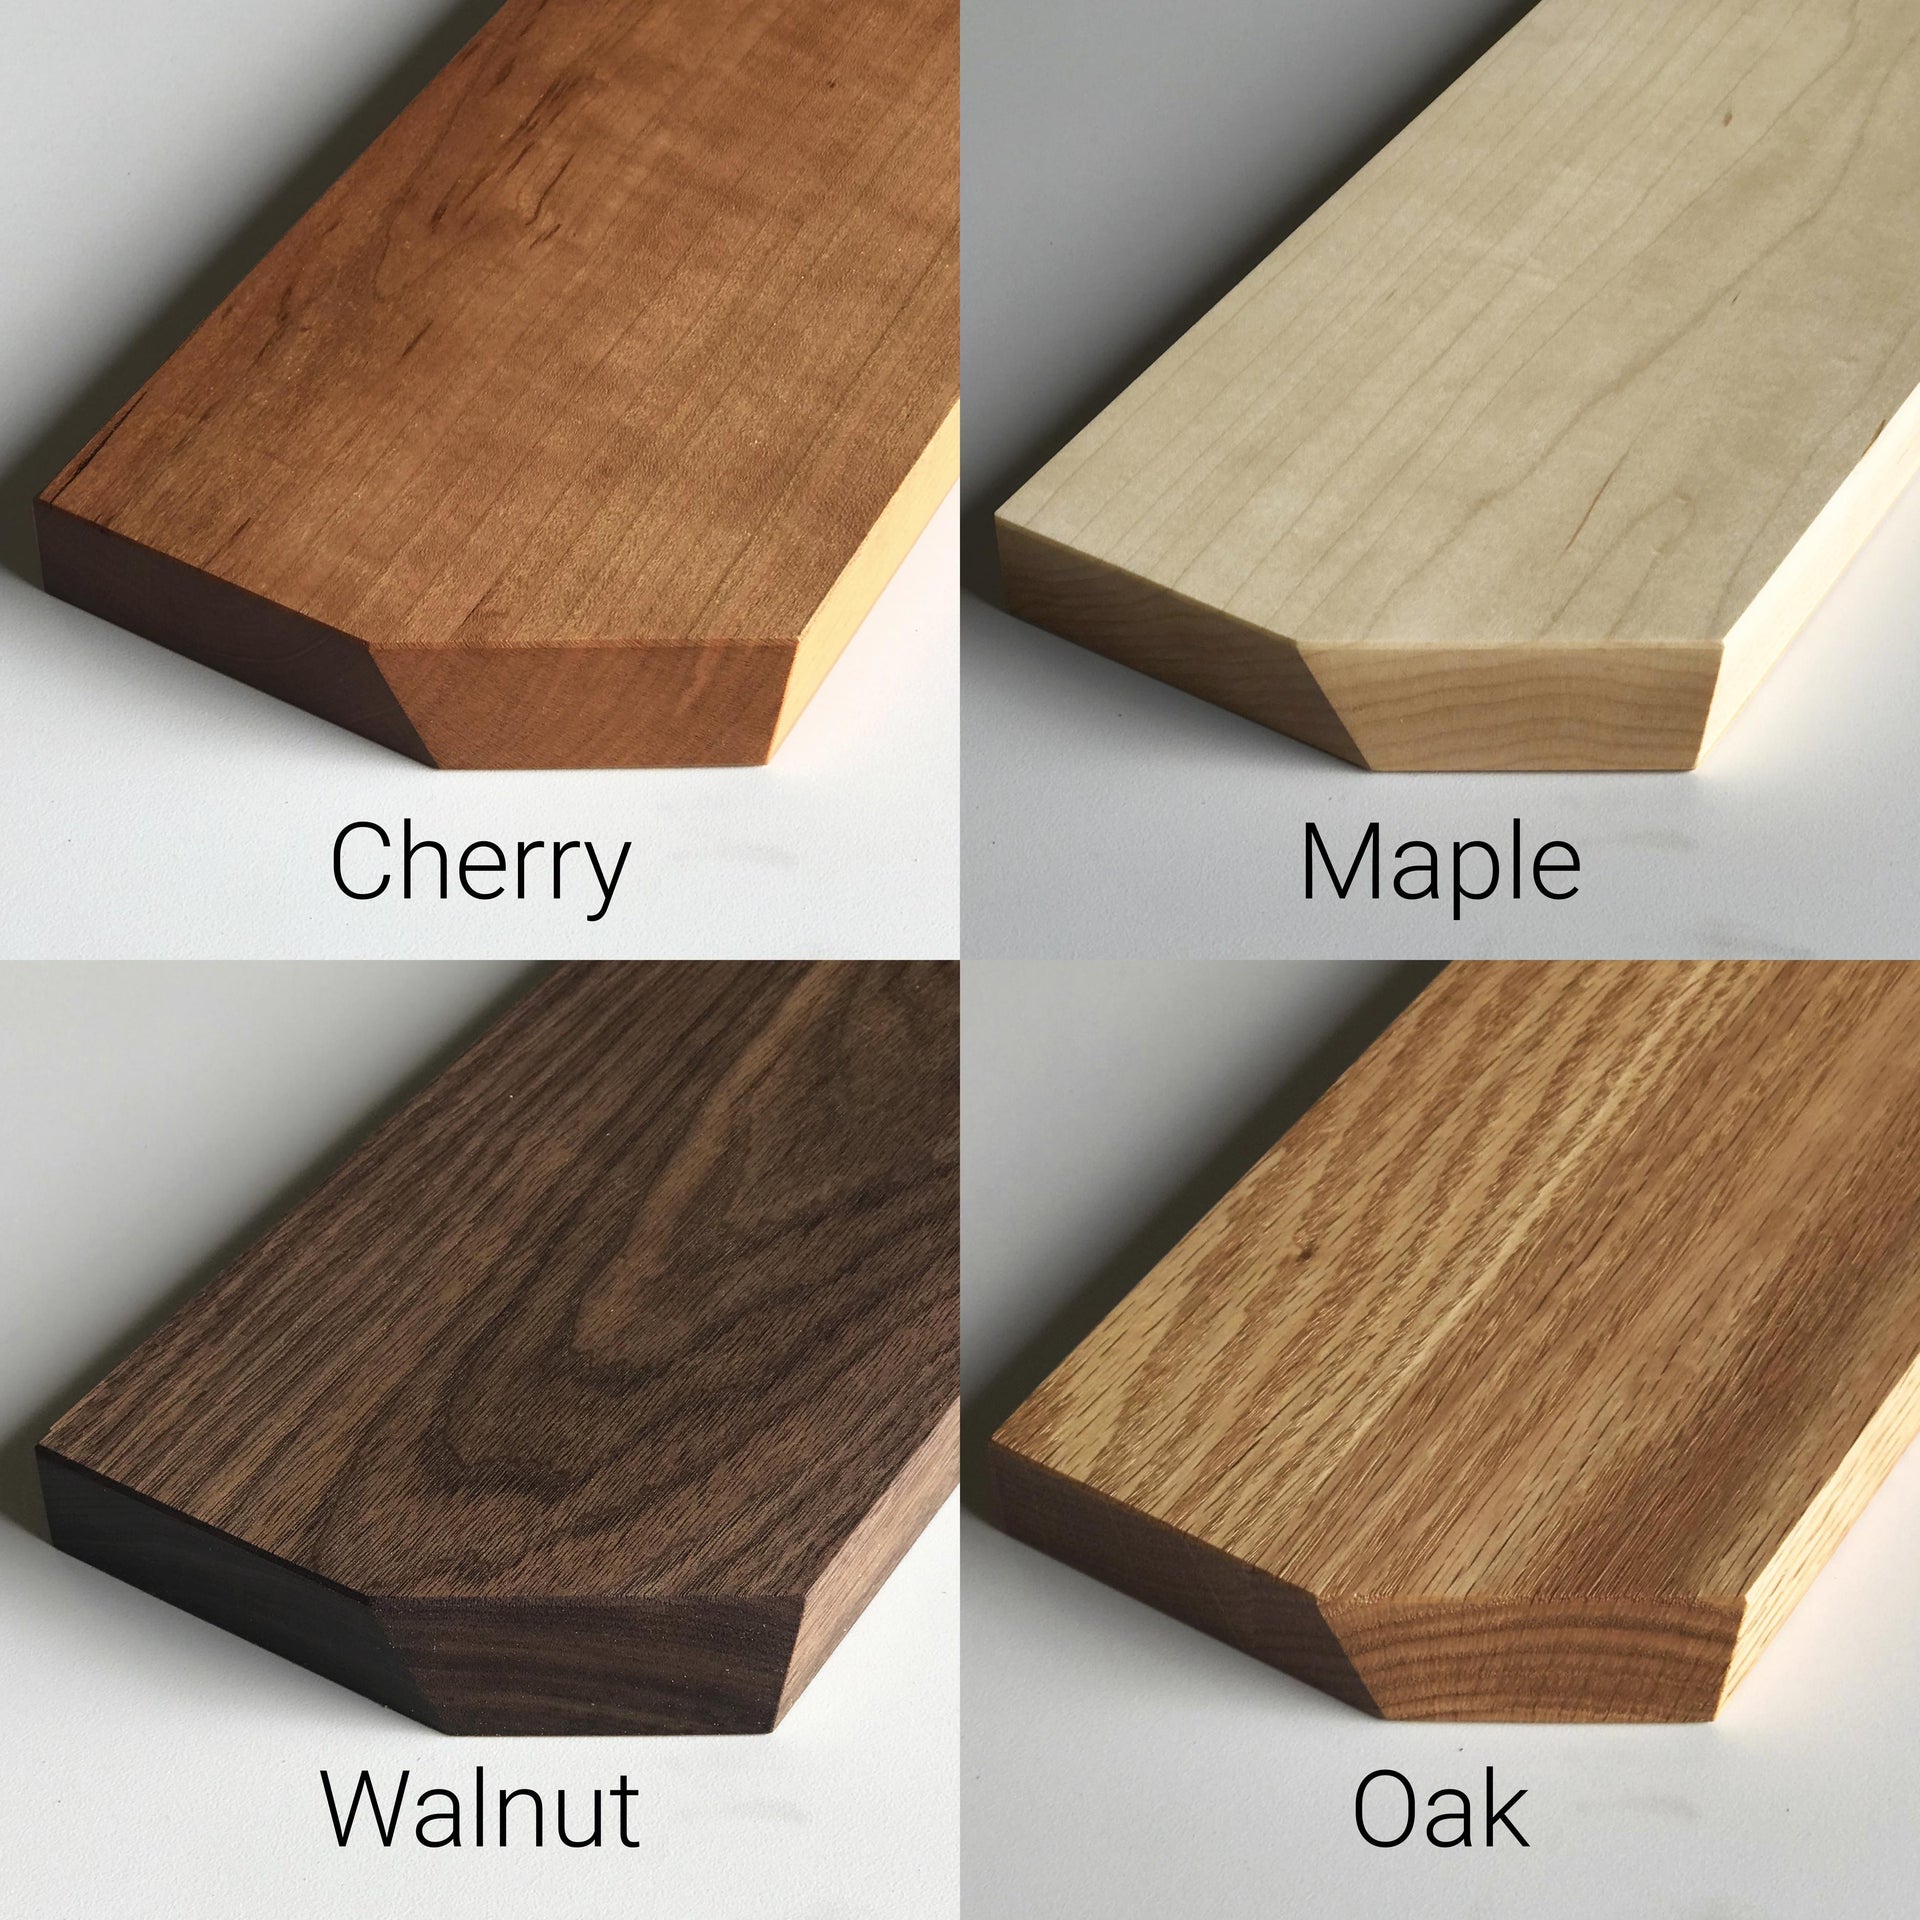 T.Y. Fine furniture wood samples